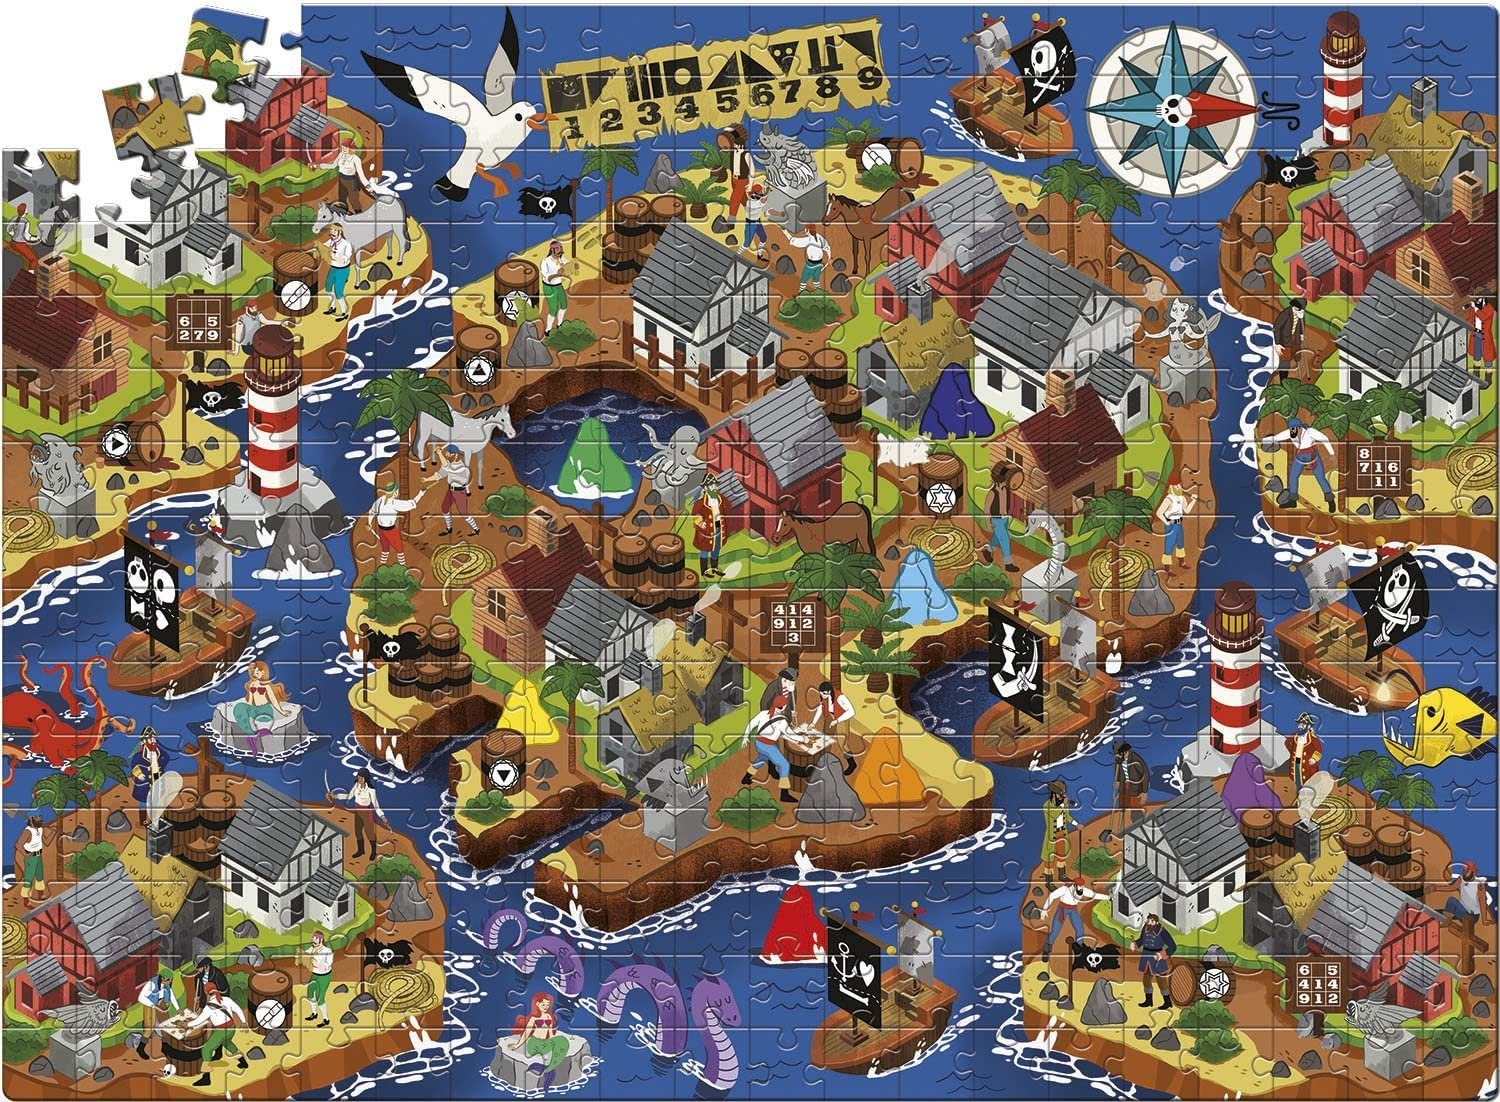 Puzzleteile, Der Made Puzzle Clementoni® Mixtery Piratenschatz in Puzzle, Europe 300